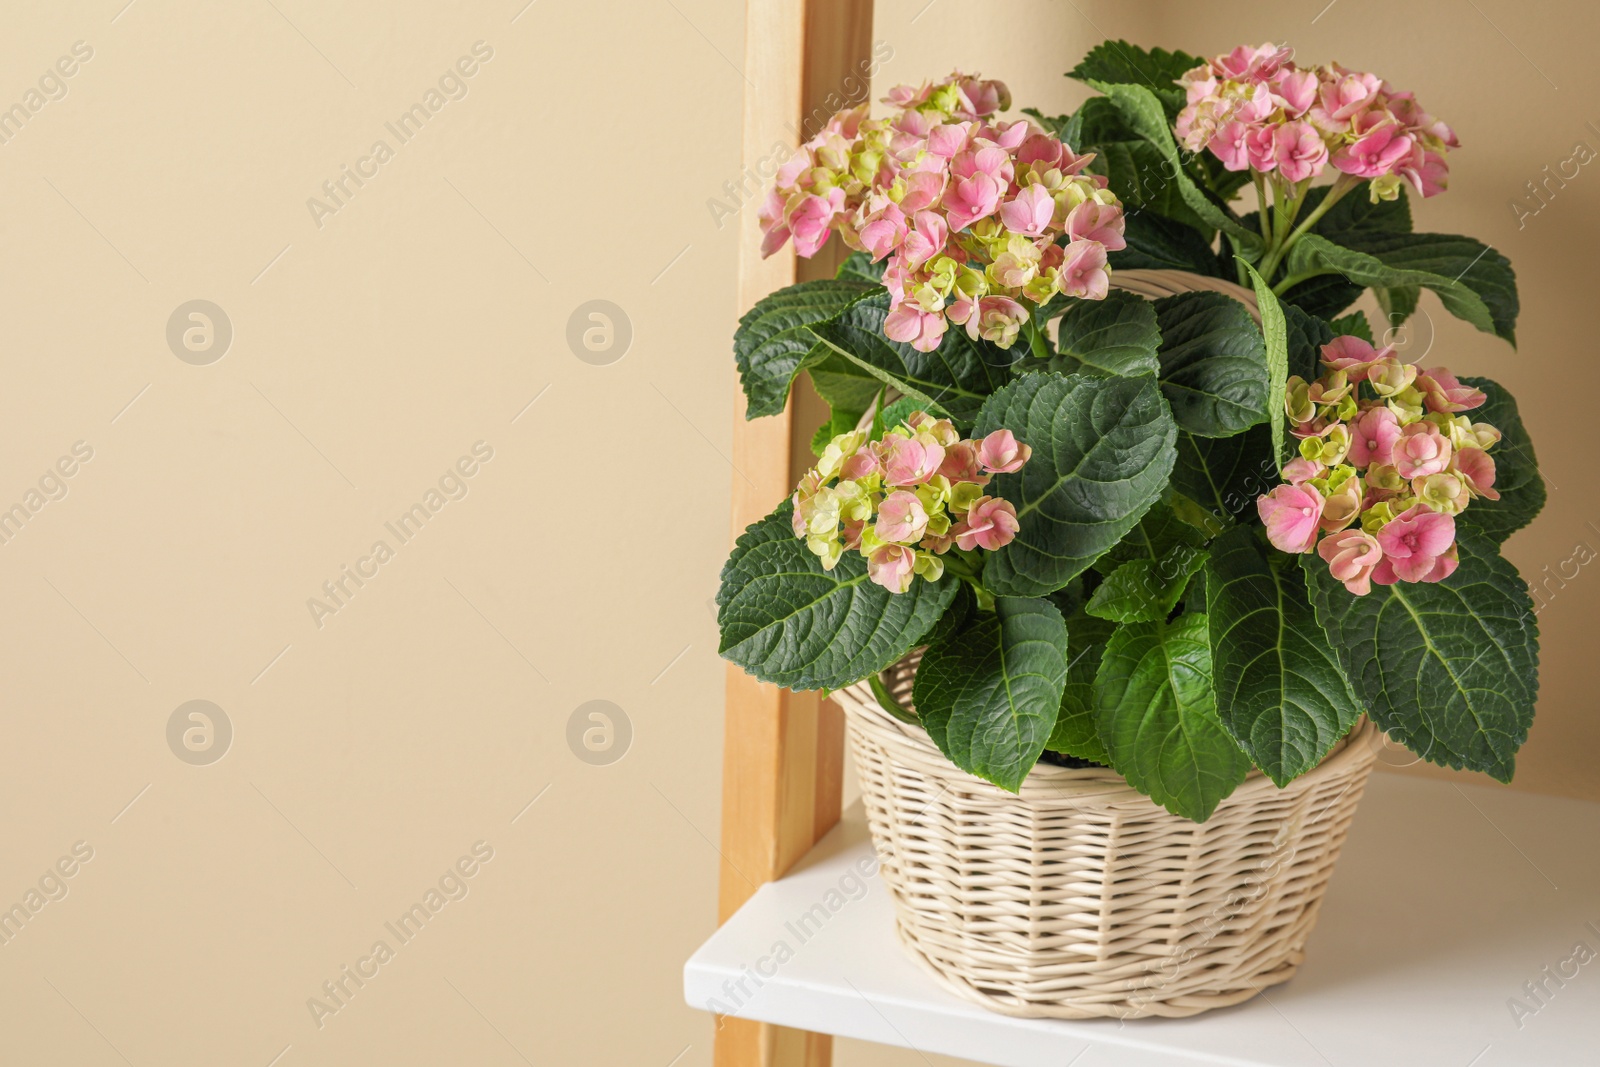 Photo of Wicker basket with beautiful hortensia flowers on shelf near beige wall. Space for text